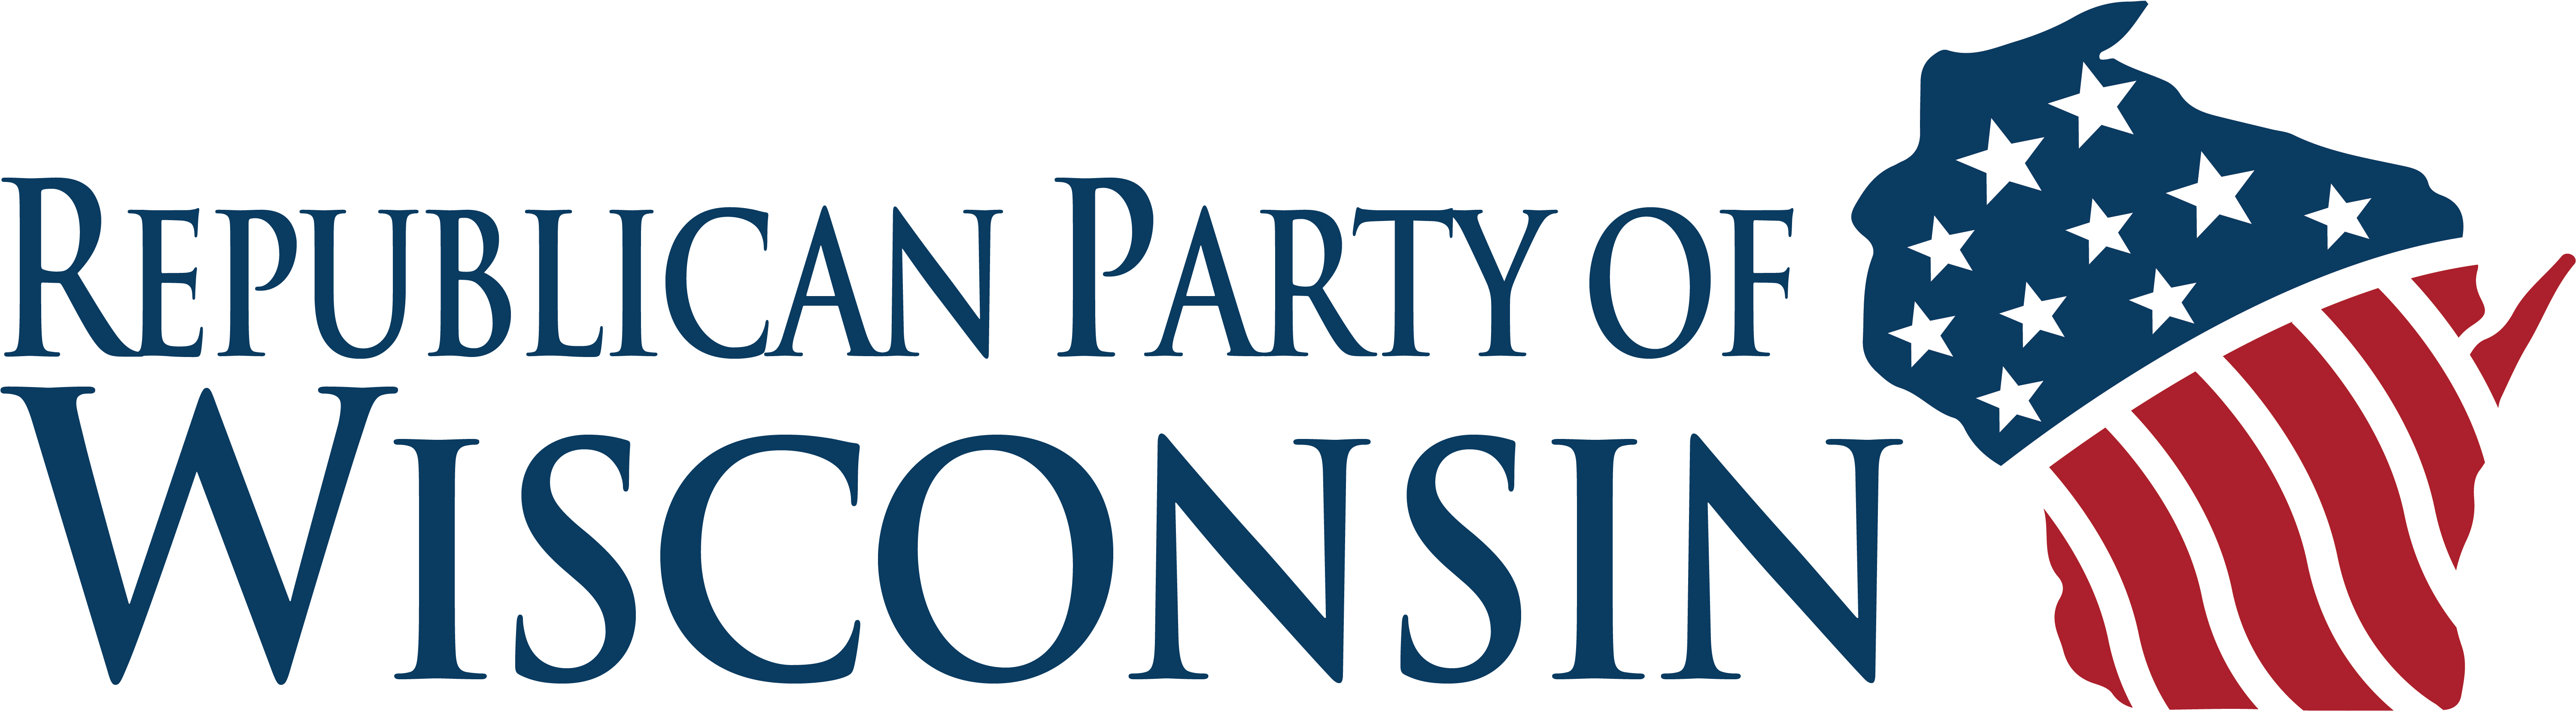 Democrats In Disarray - Republican Party Of Wisconsin (6023x1816)